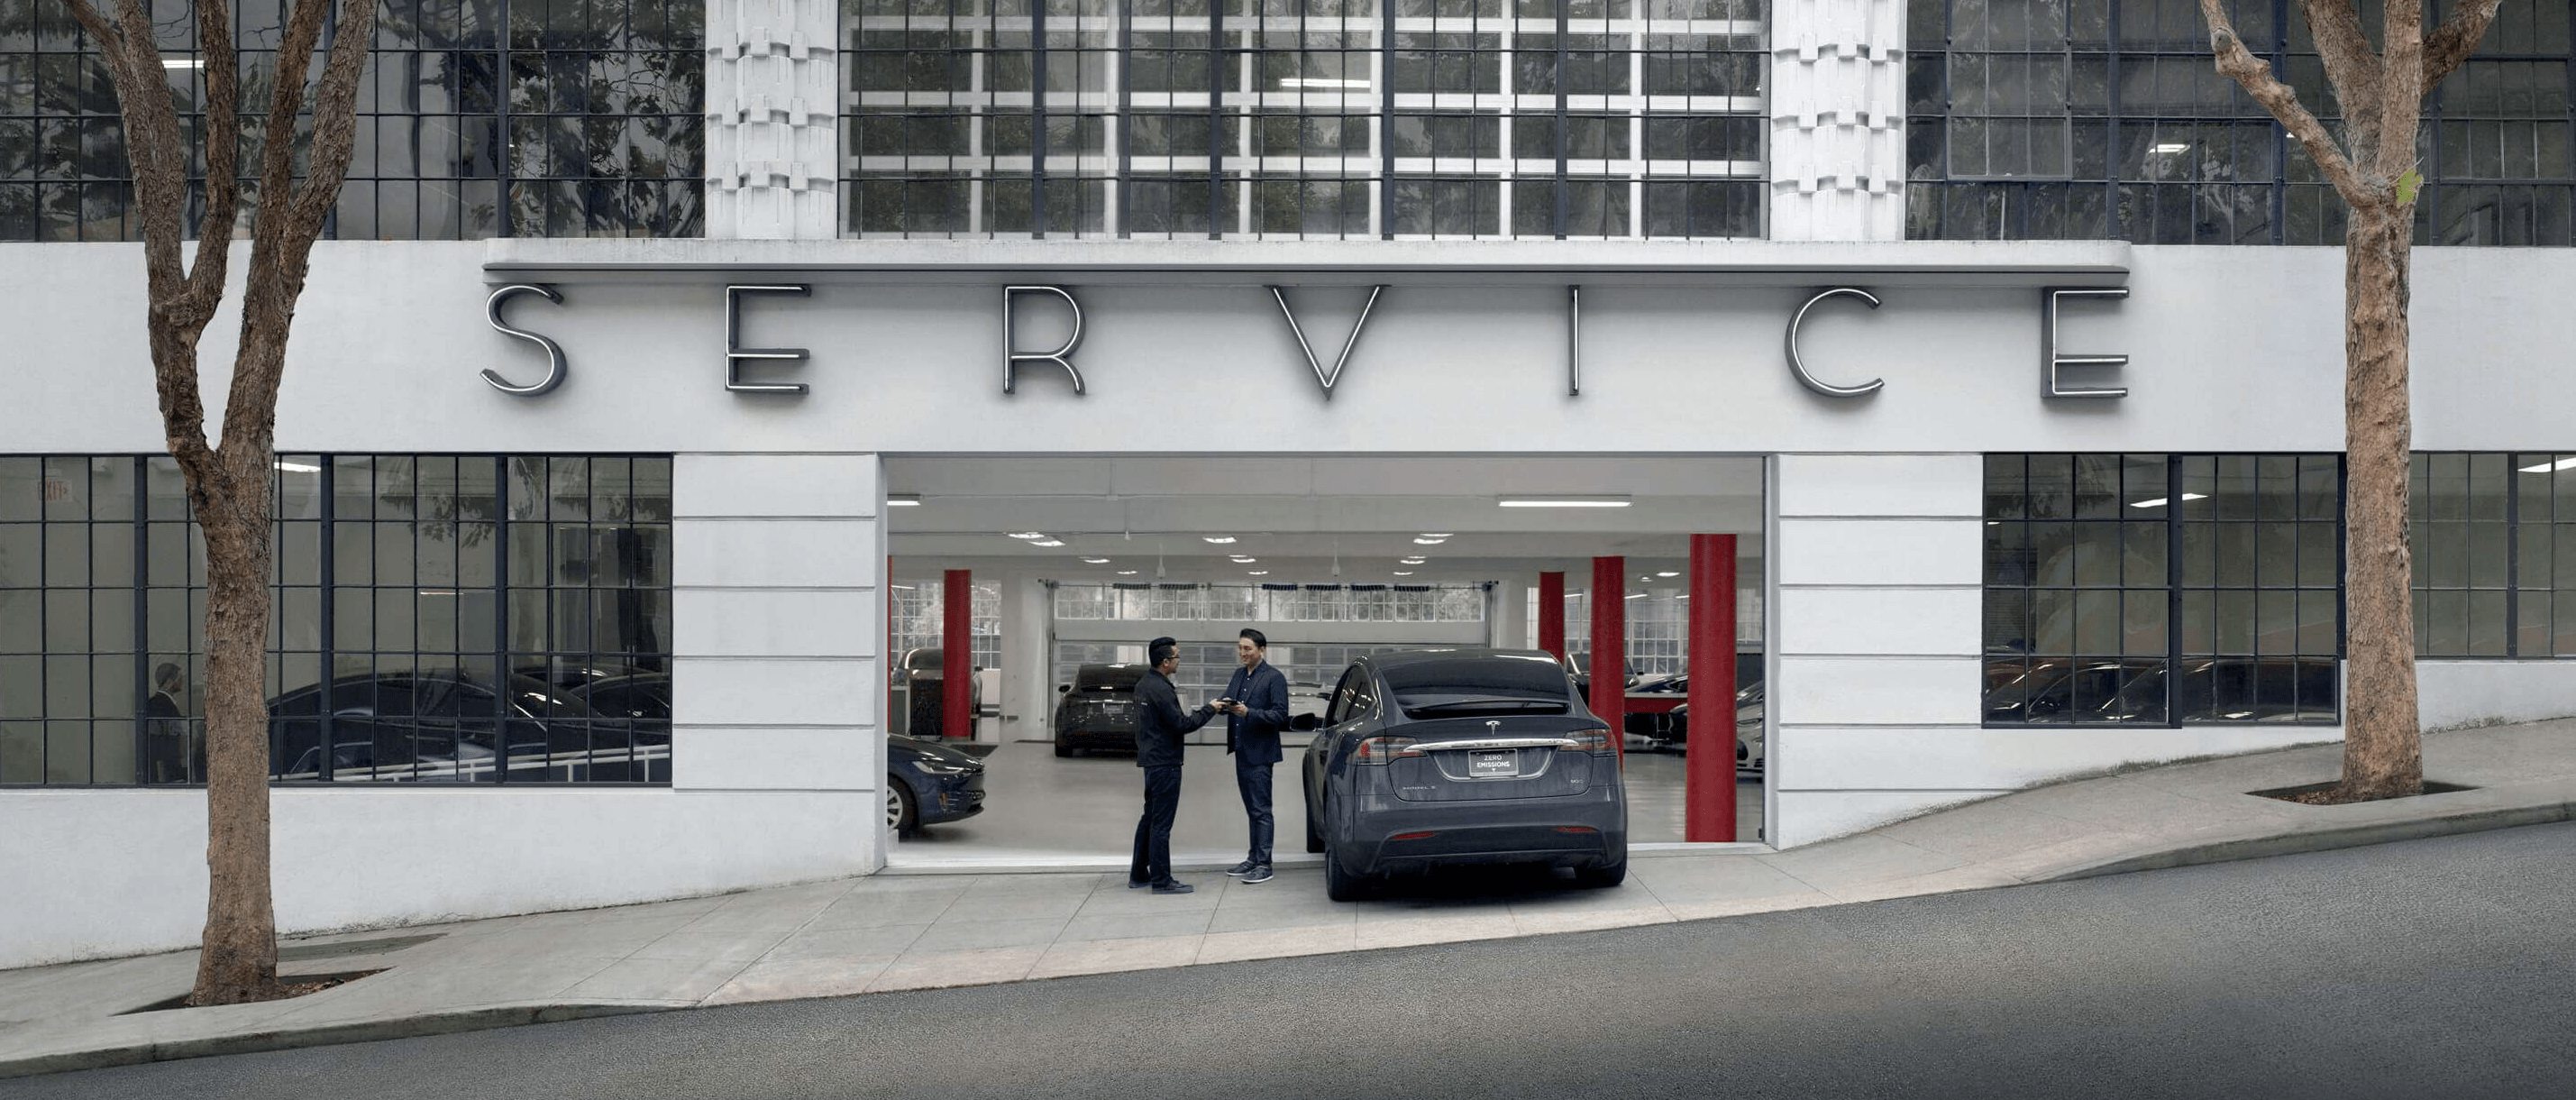 Tesla Looking to Build Service Center in Israel - TeslaNorth.com